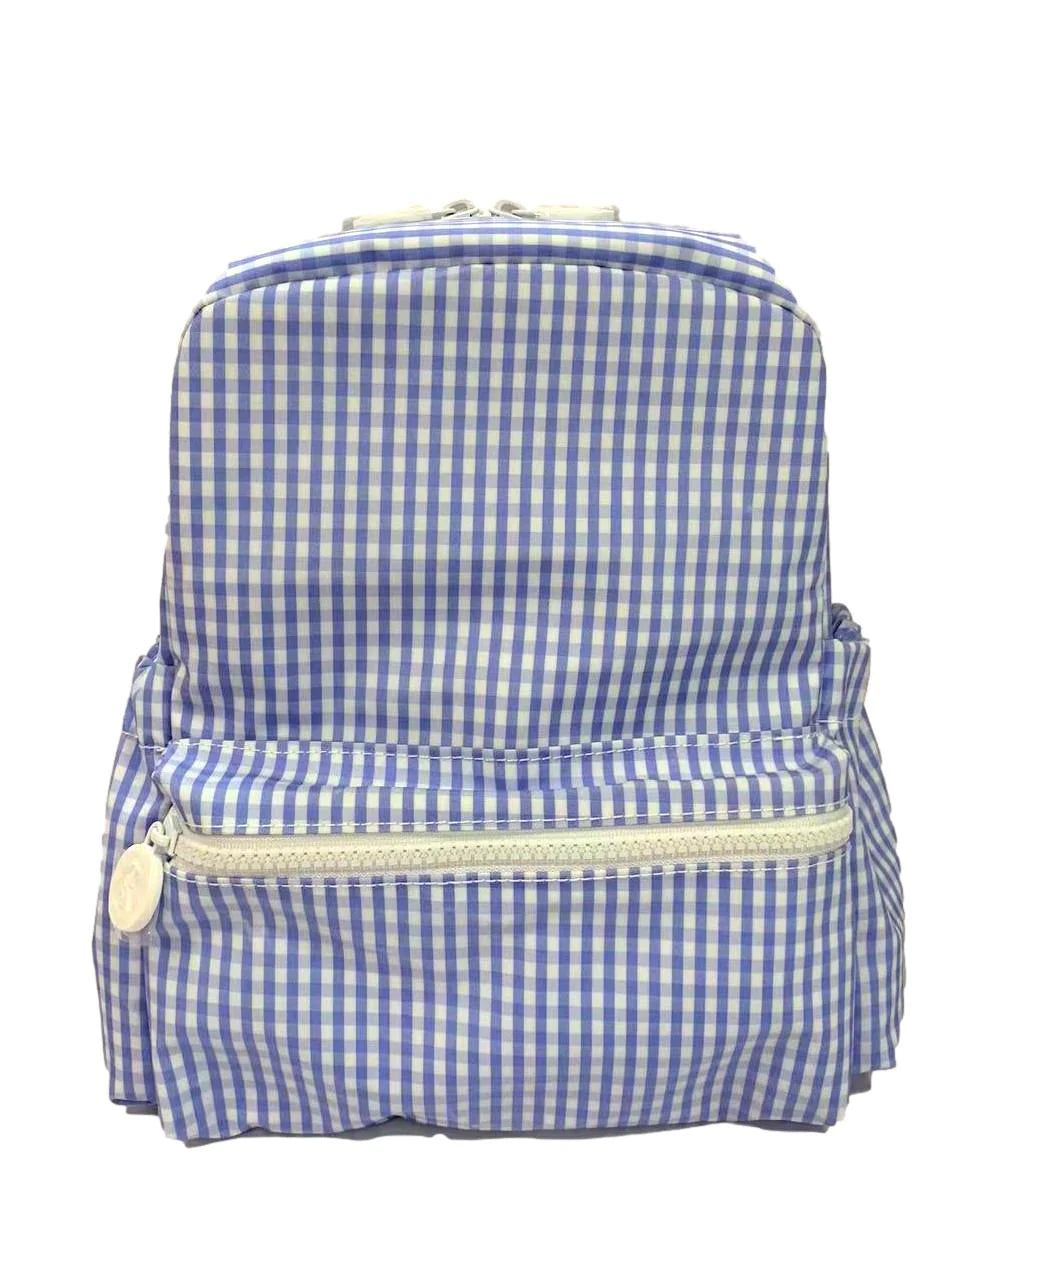 Mini Backpacks by TRVL